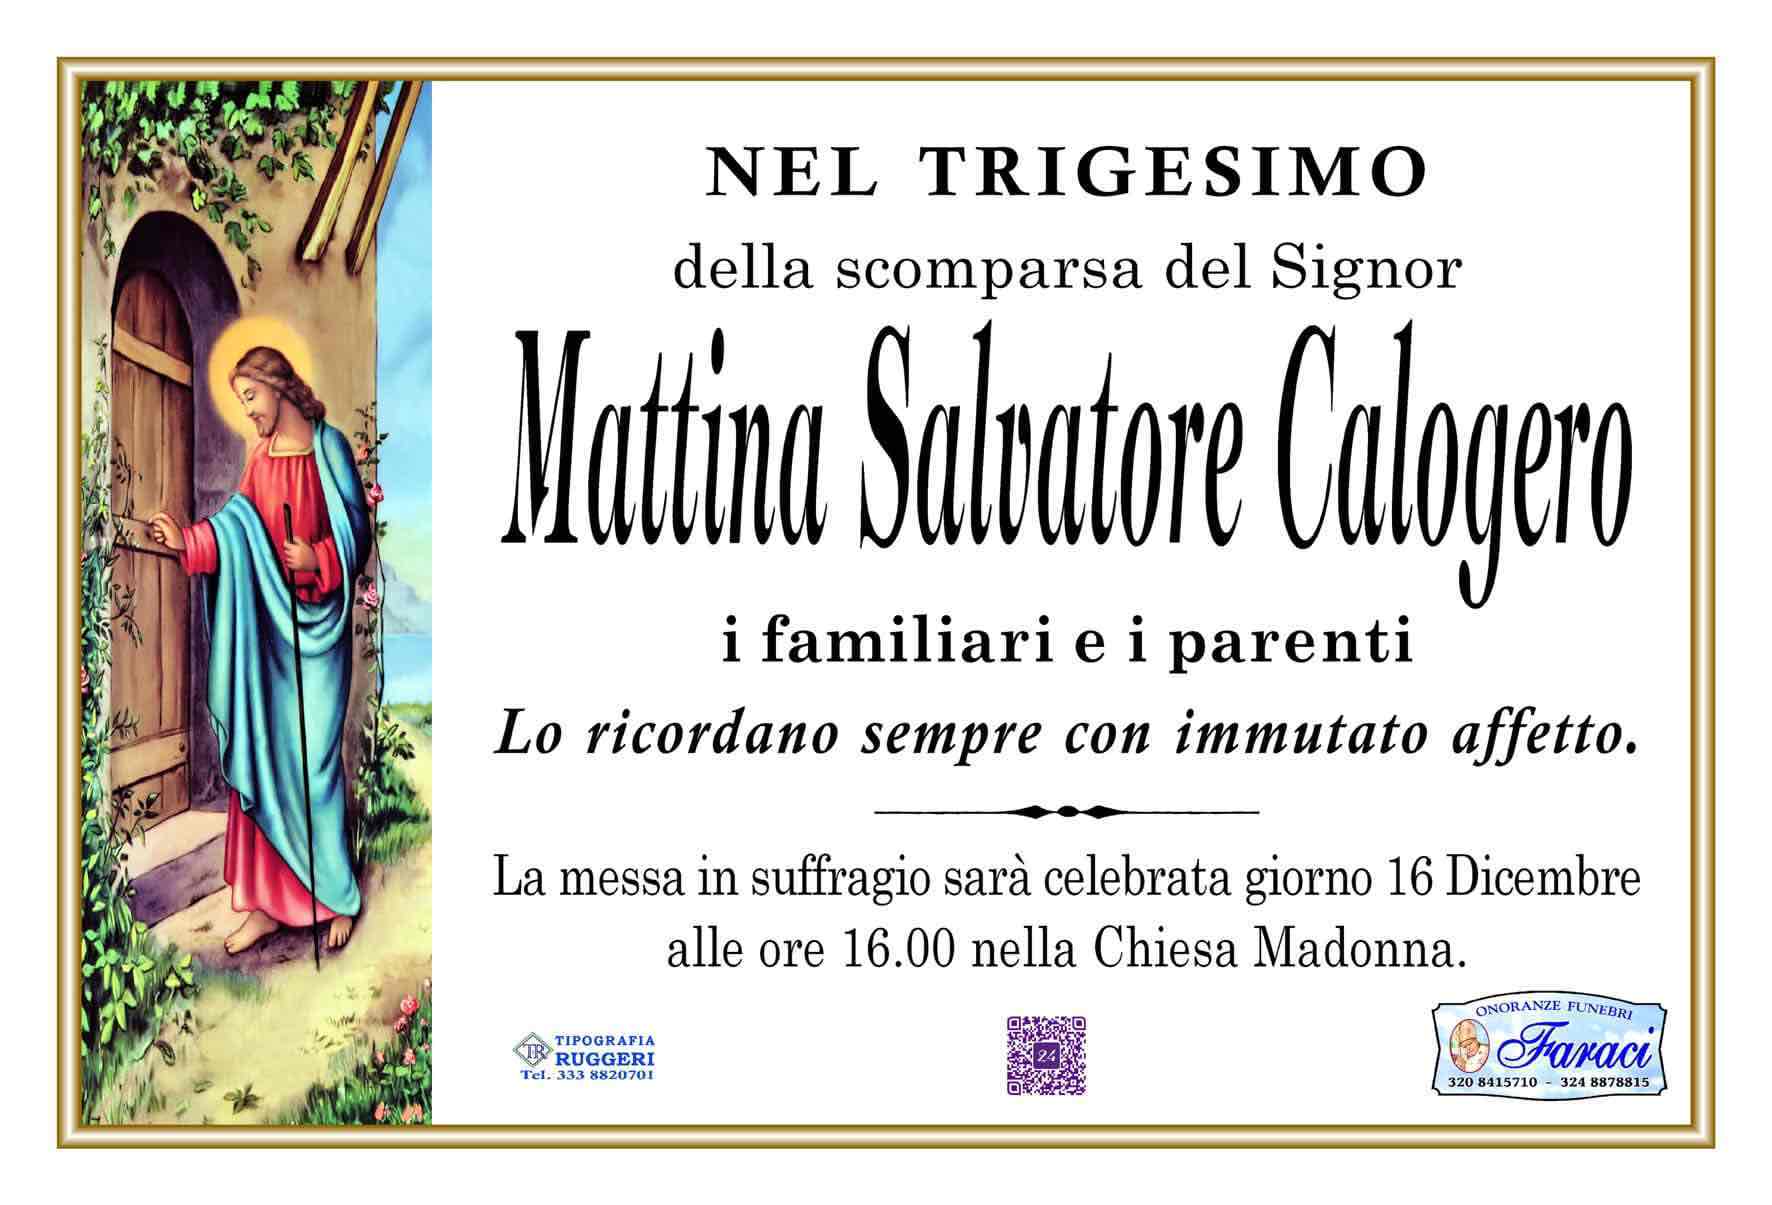 Salvatore Calogero Mattina